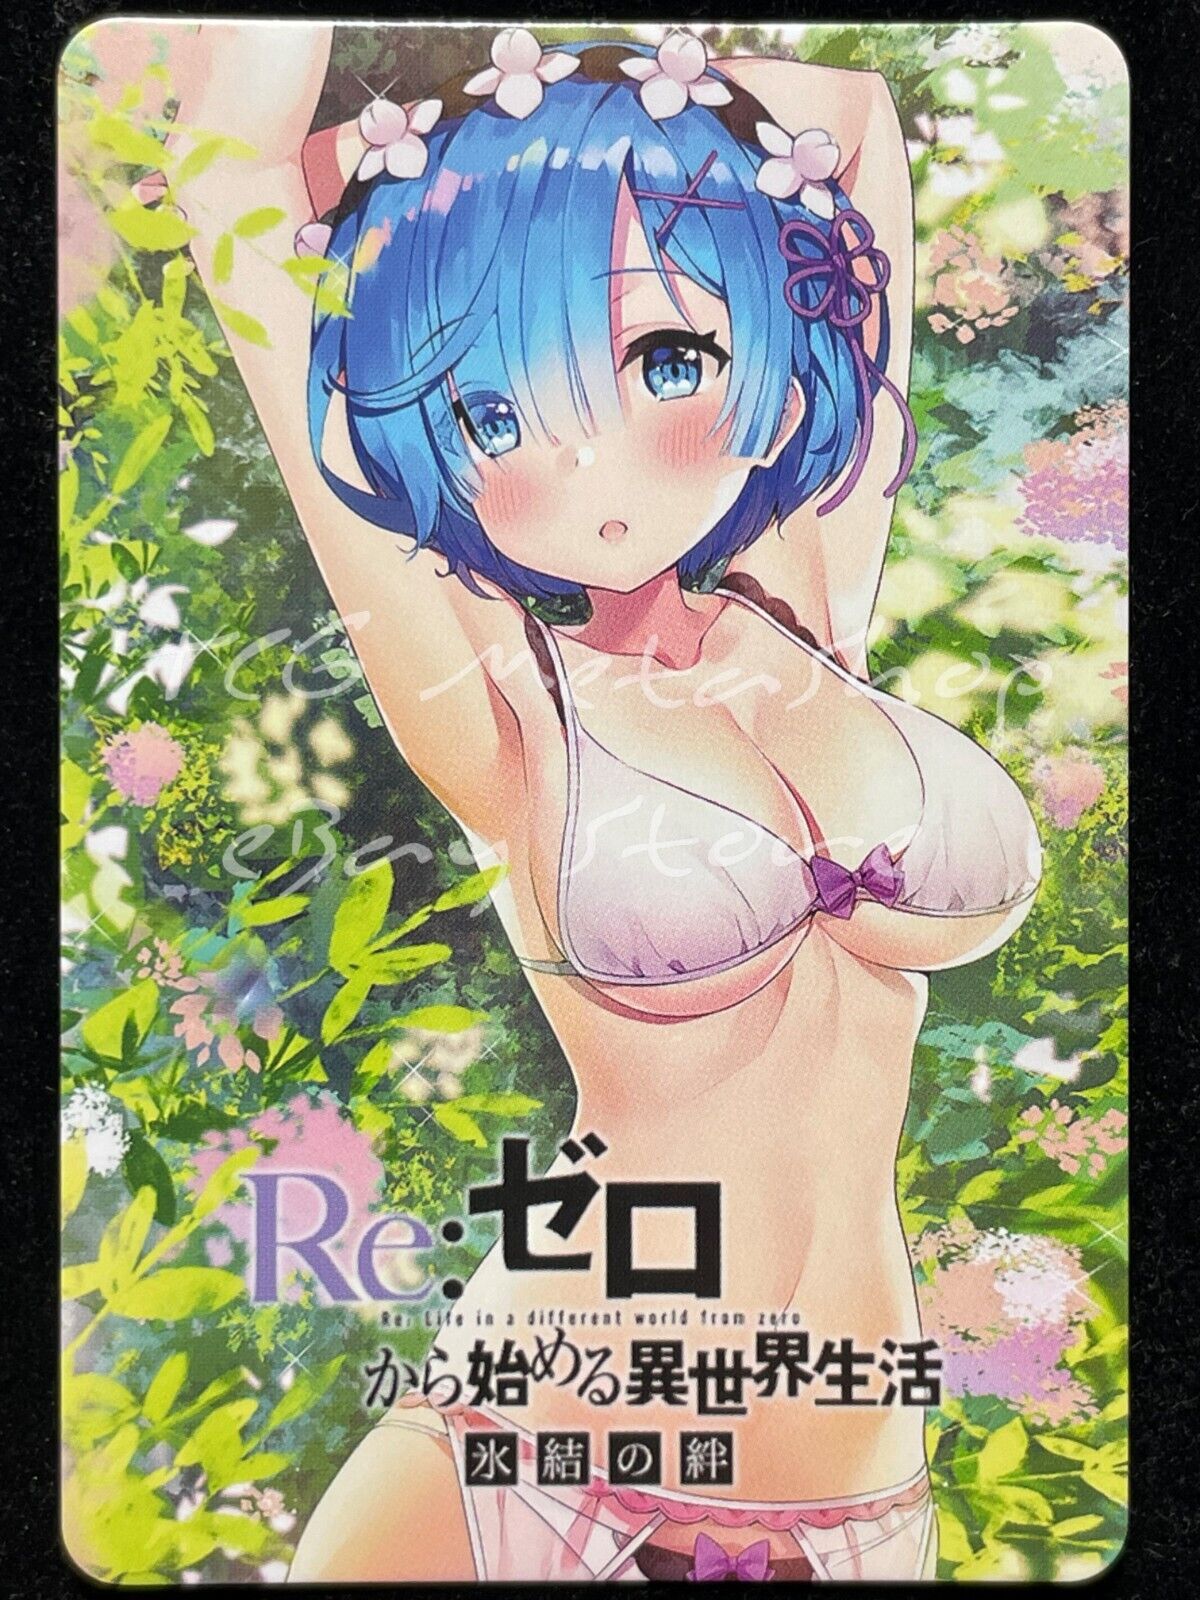 🔥 Rem Re:Zero Goddess Story Anime Card ACG # 1580 🔥